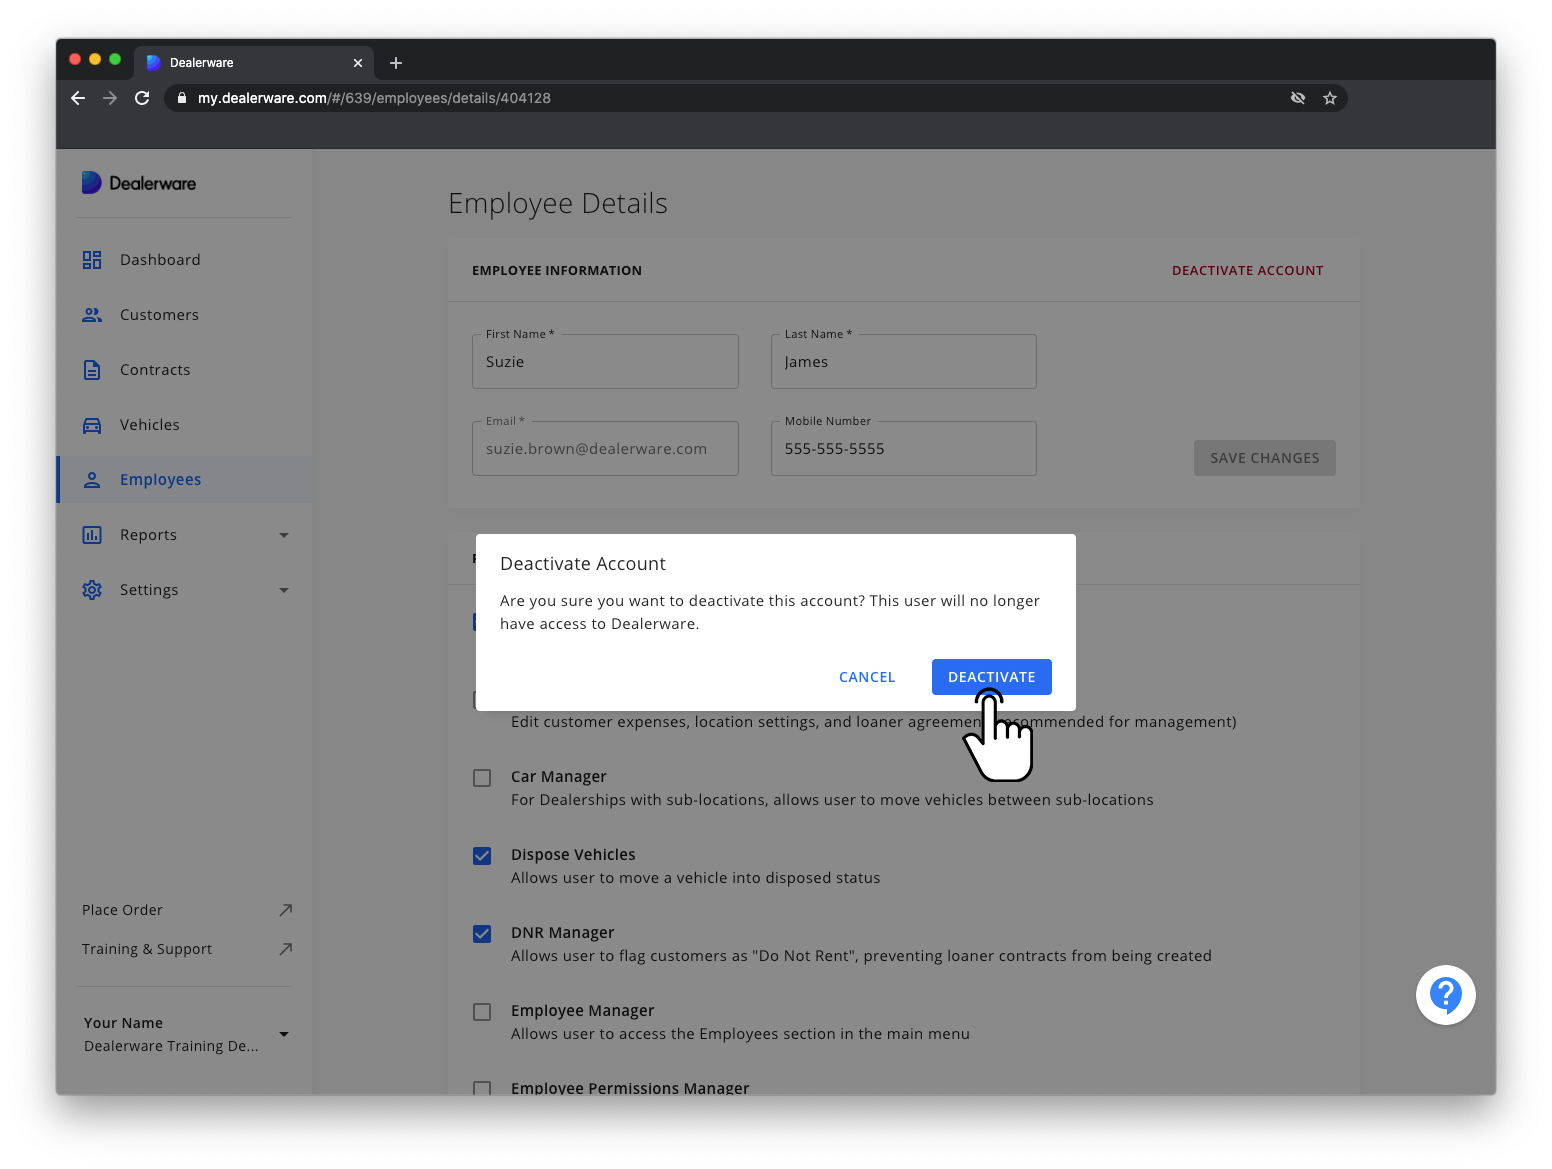 Image 2: Dealerware Employee Details screen and Main Menu, Deactivate Account pop-up, fingertap icon positioned over Deactivate button